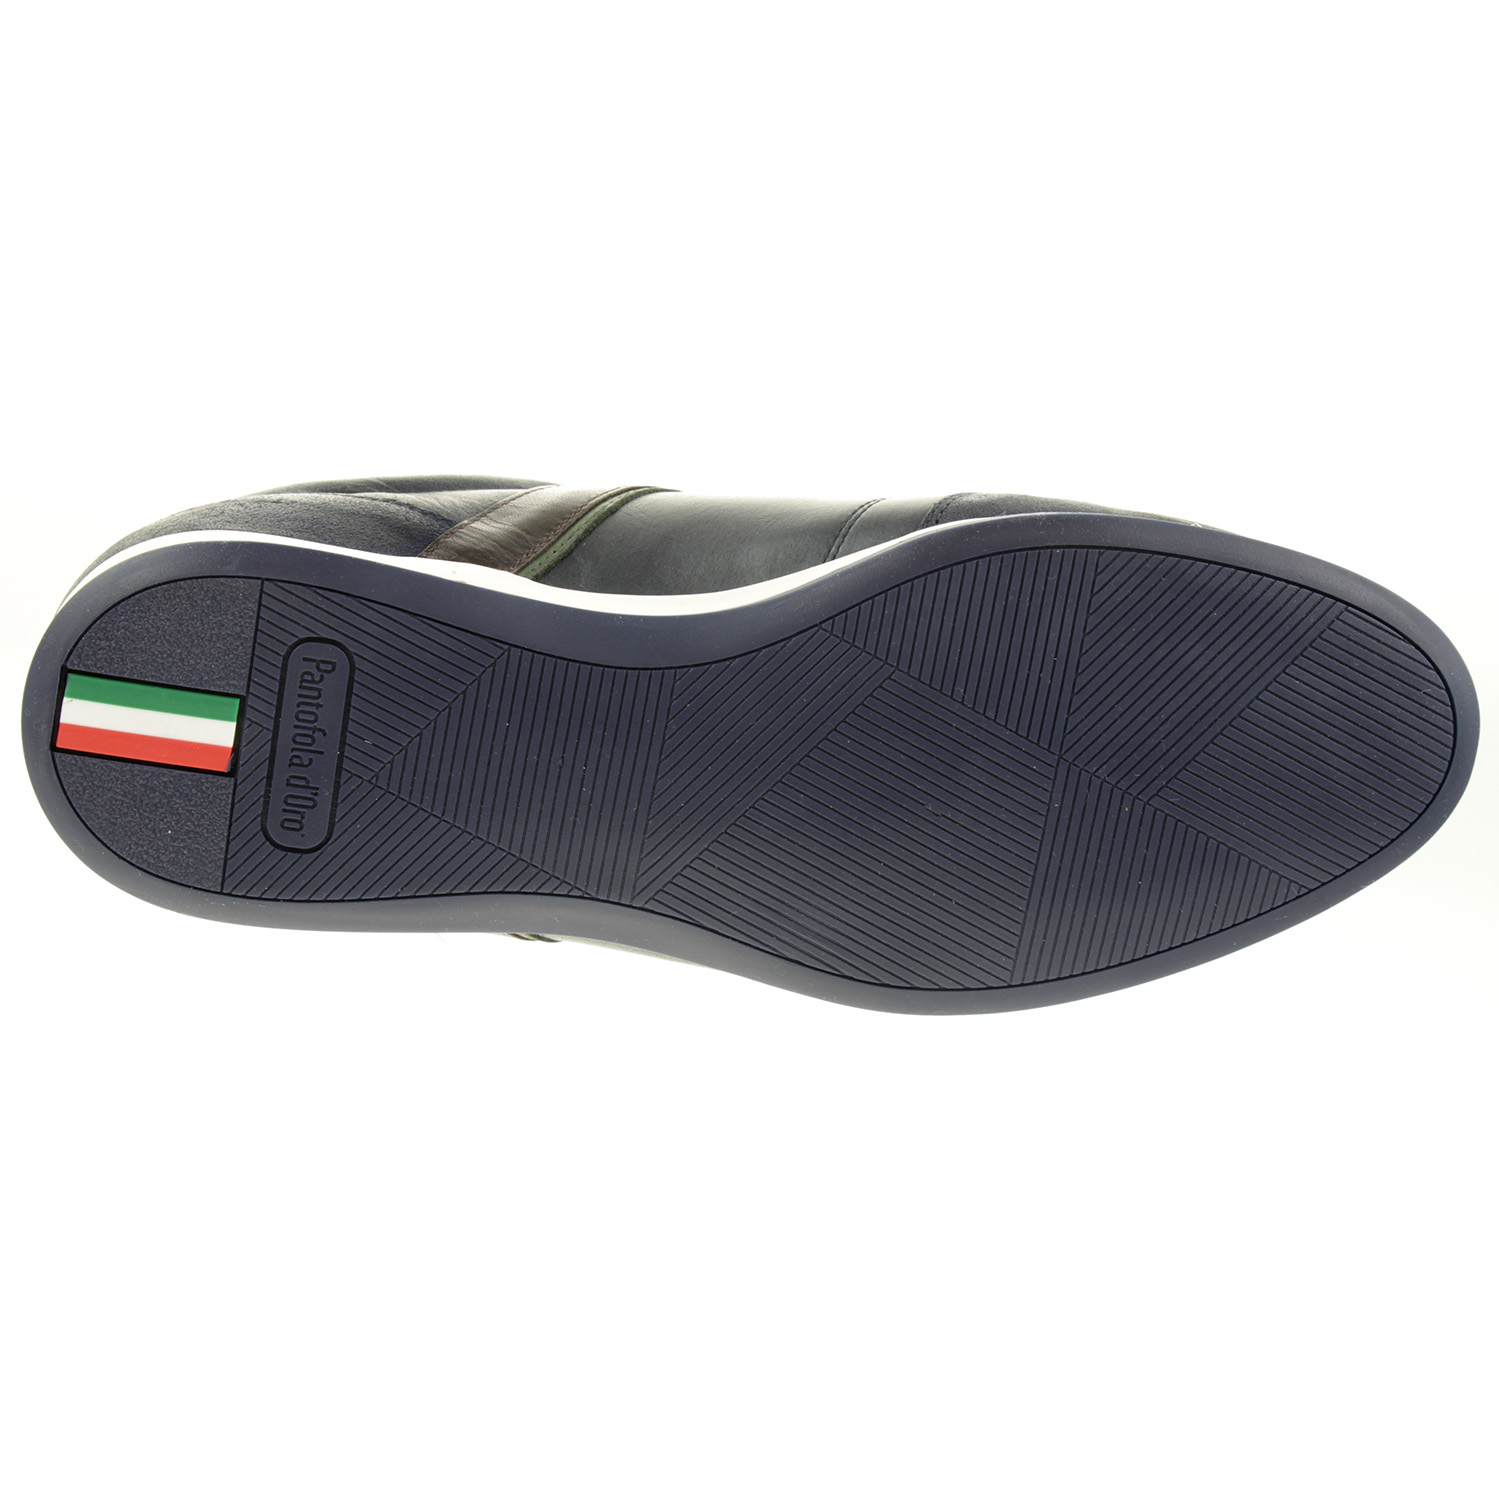 Pantofola d' Oro ROMA UOMO LOW Herren Sneaker blau Leder